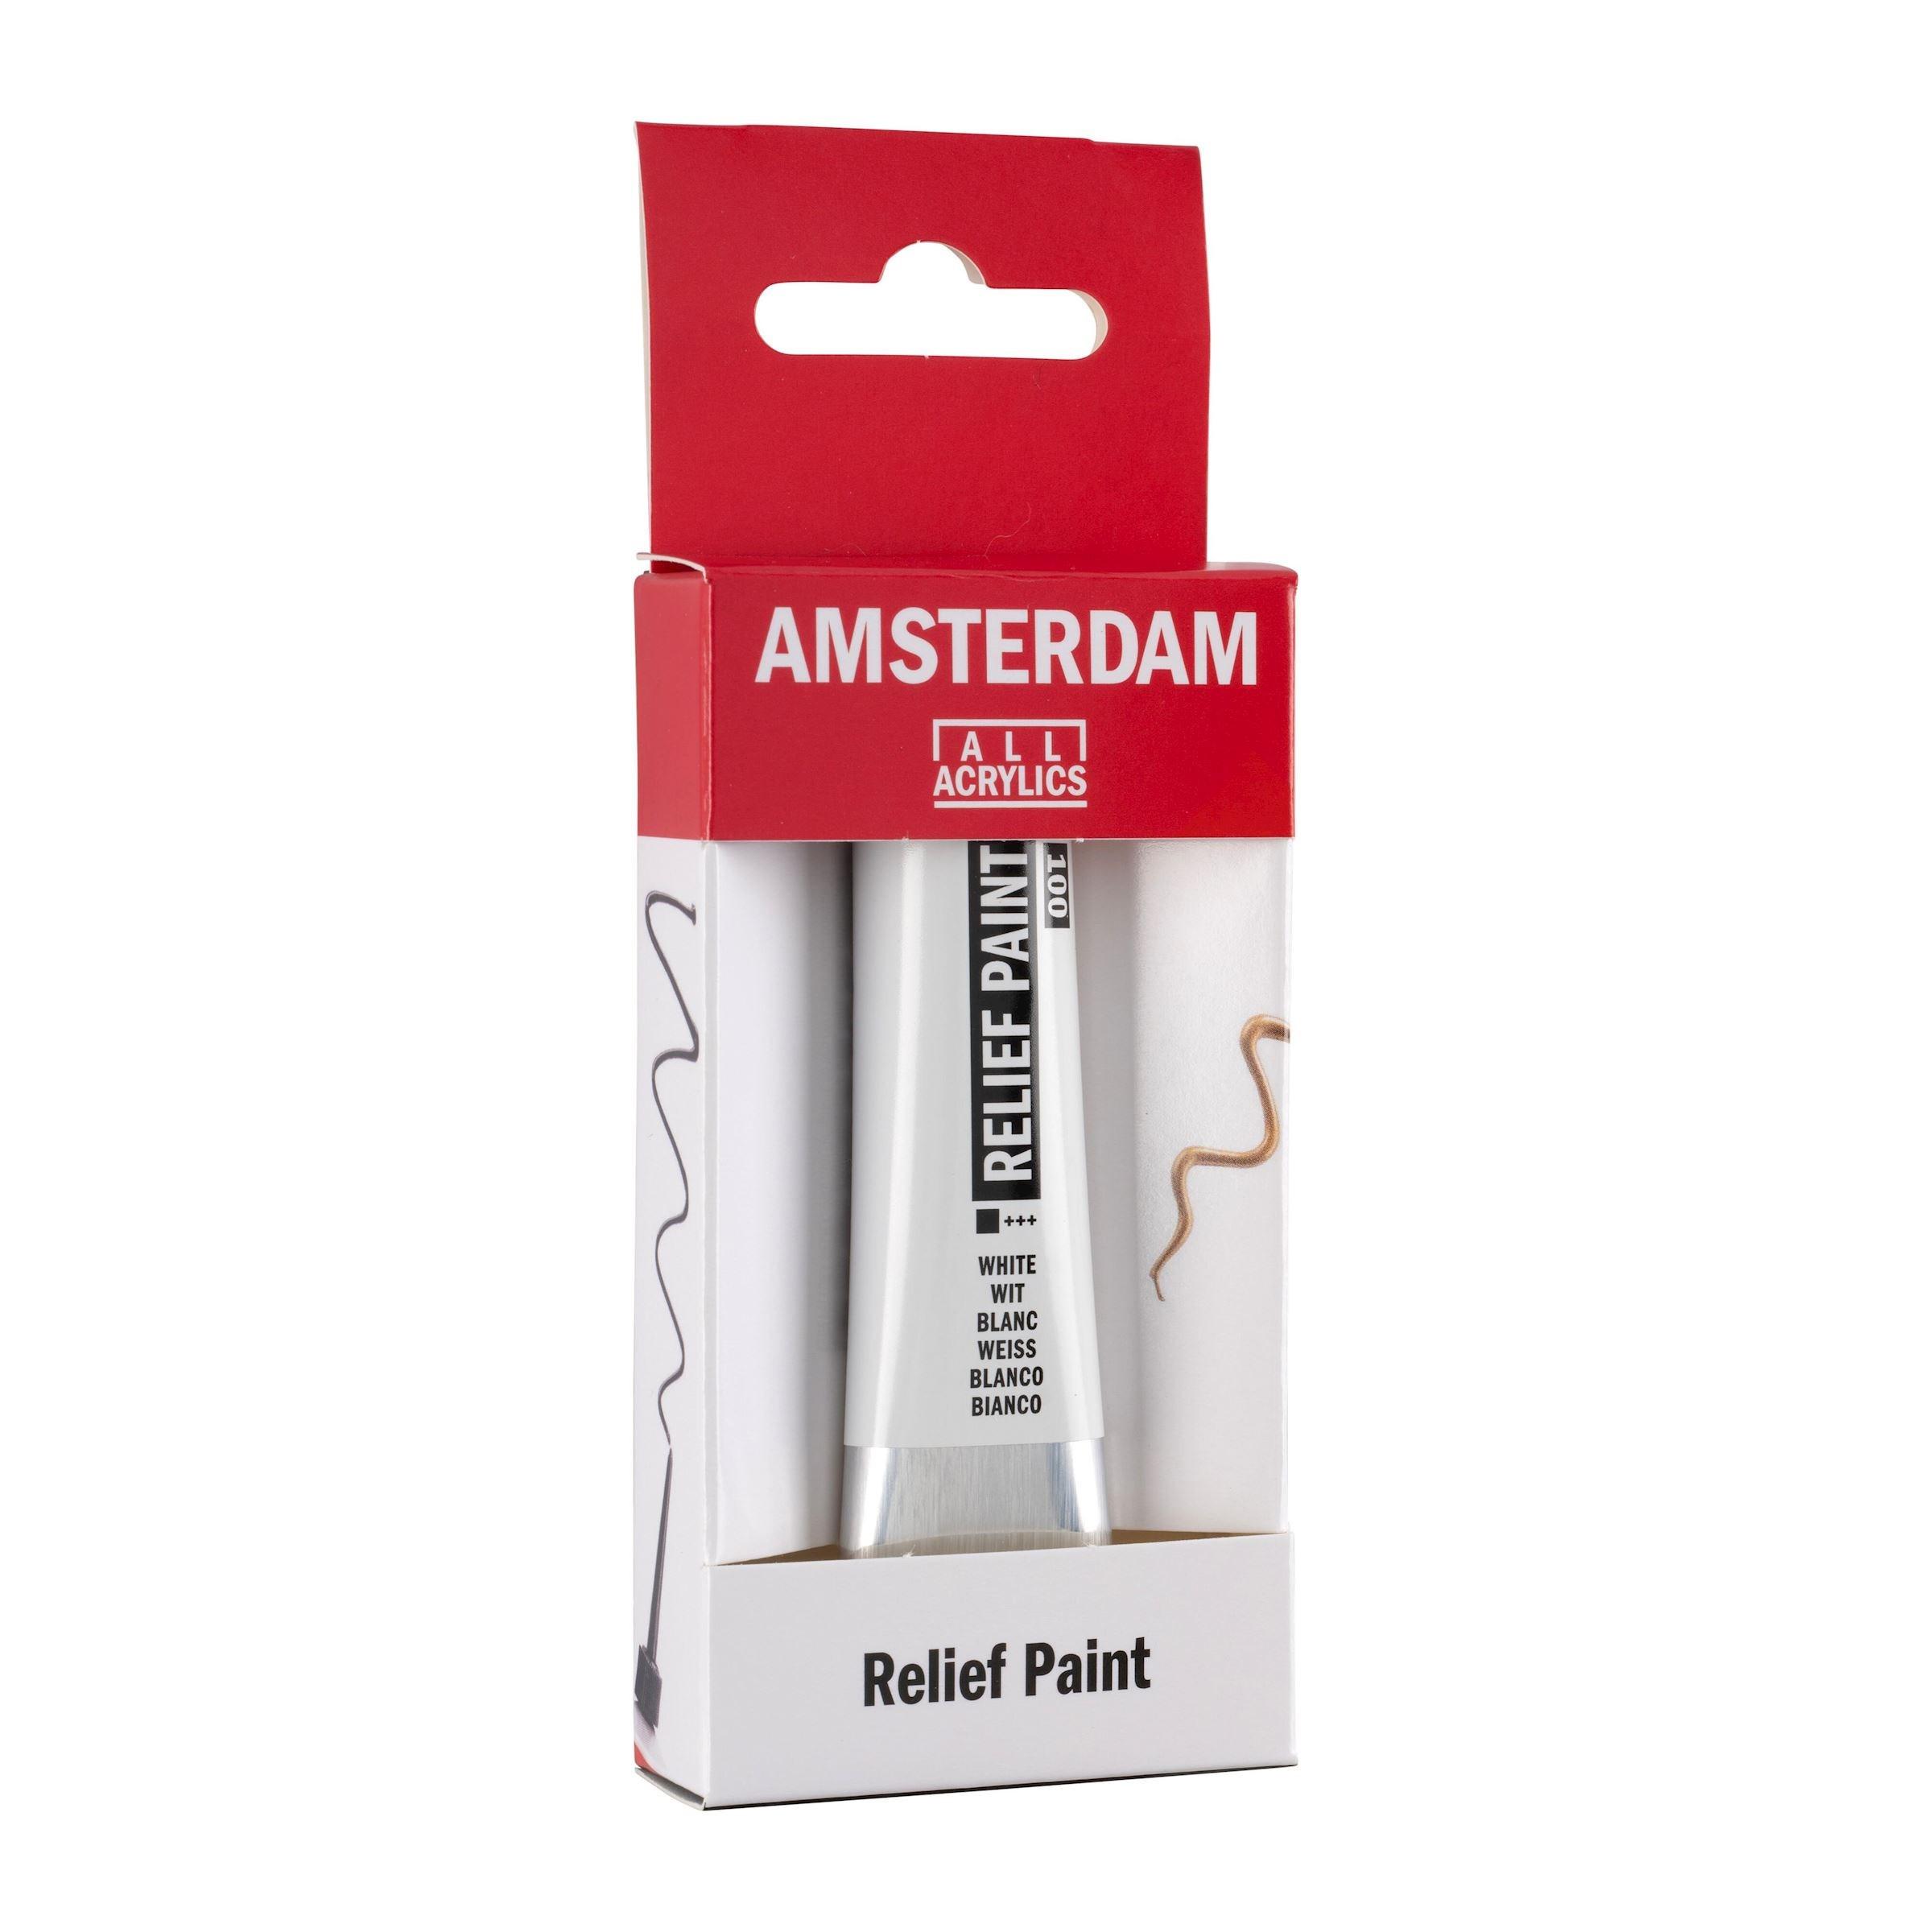 Royal Talens  Amsterdam 58041001 peinture acrylique 20 ml Blanc Tube 